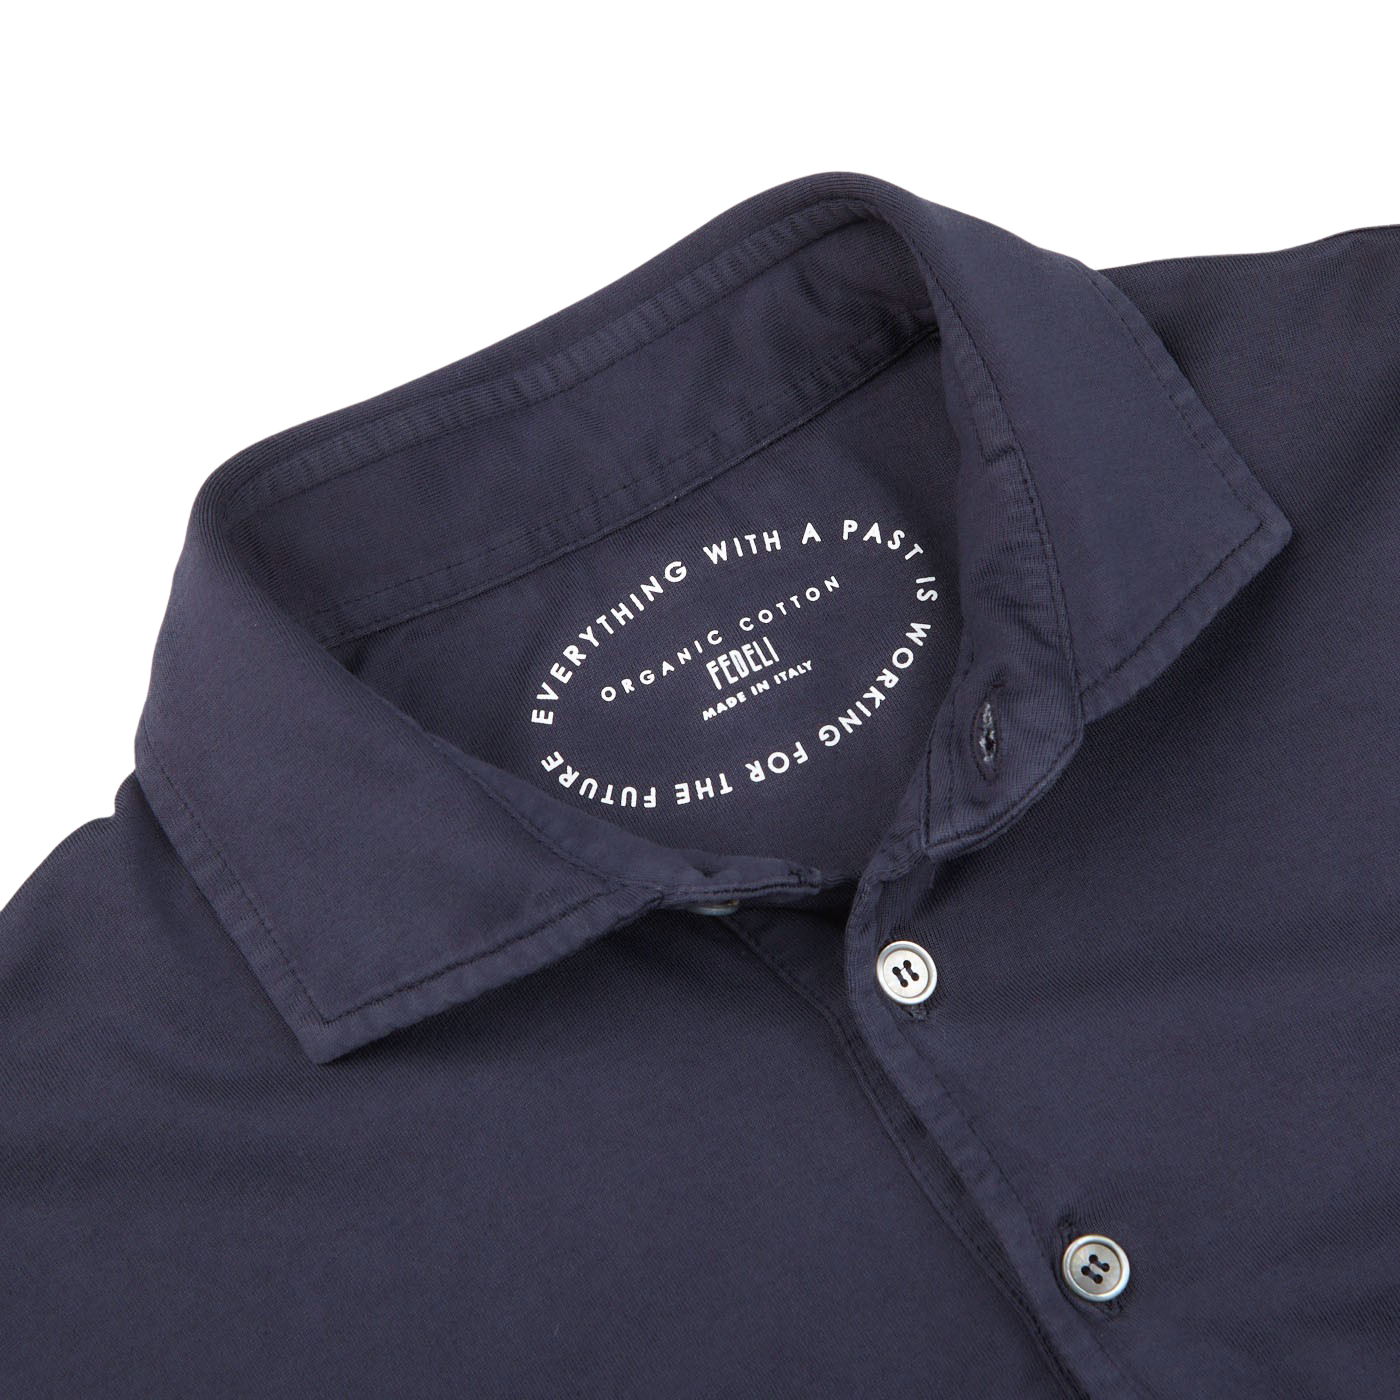 Men's Short Sleeves Organic Cotton T-Shirt - Iconic - Fedeli